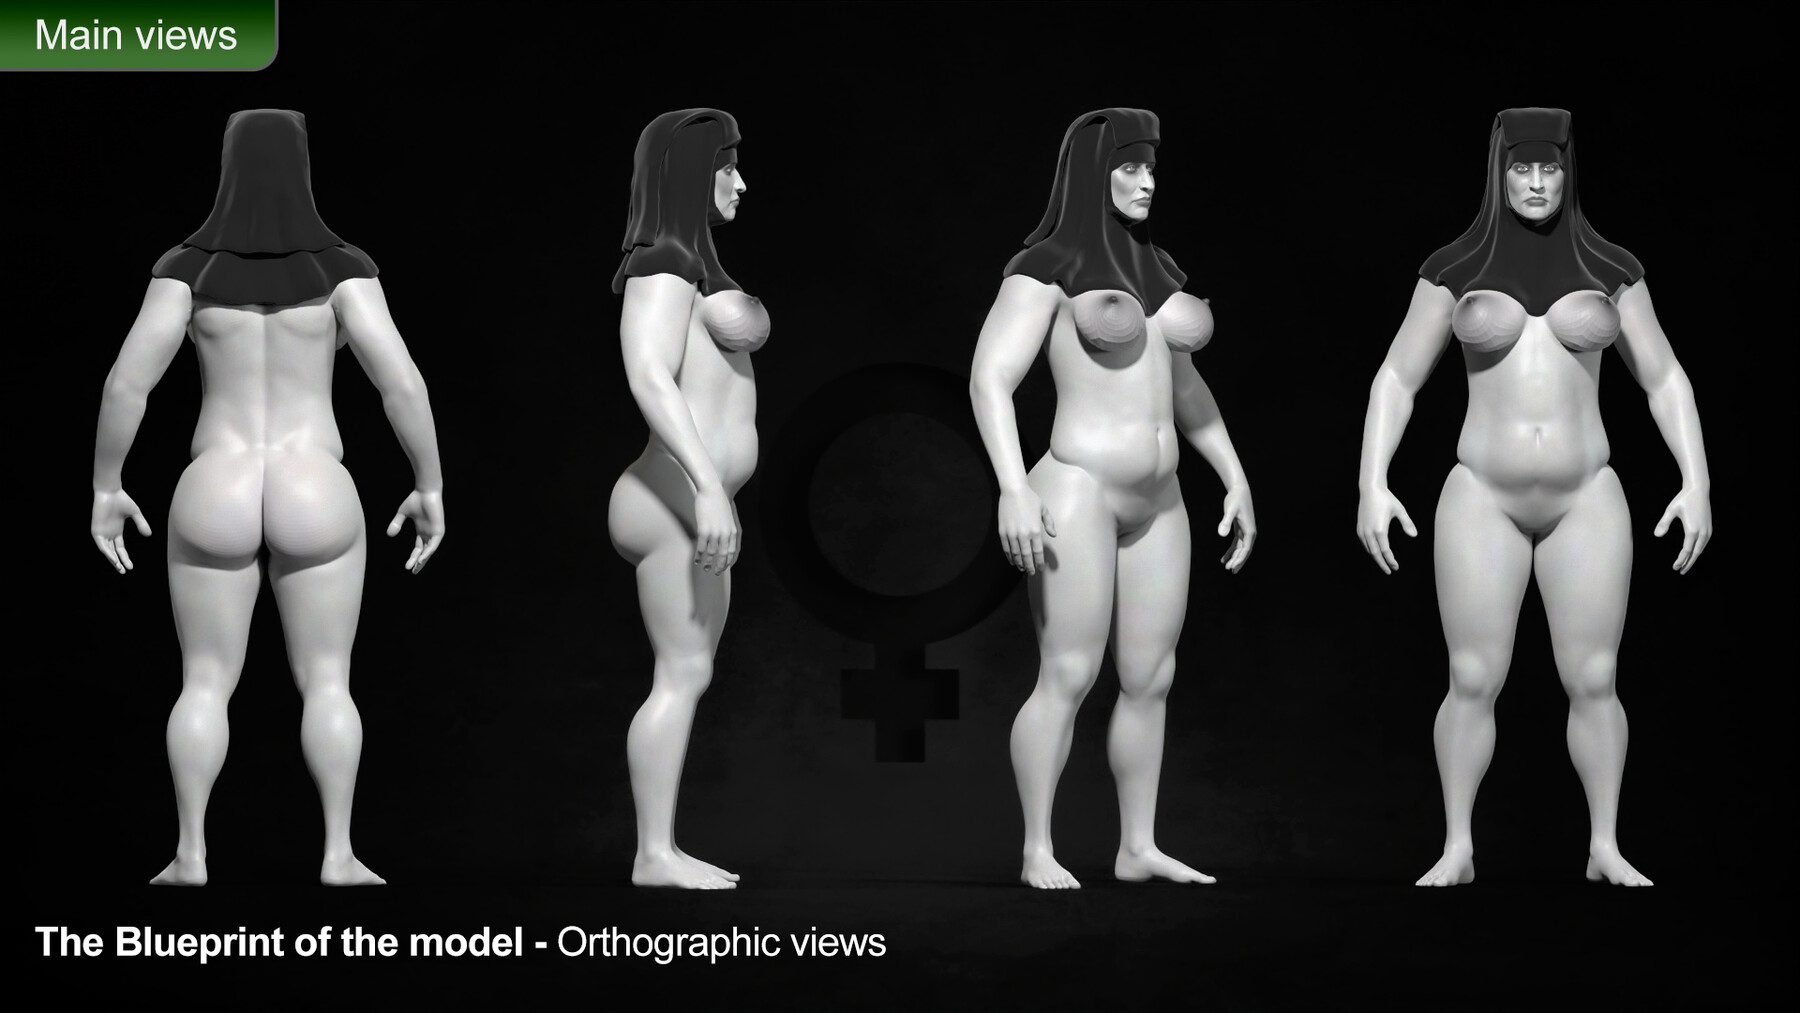 ArtStation - Human Female [ Body/Skin Basemesh ] Wide-Hips